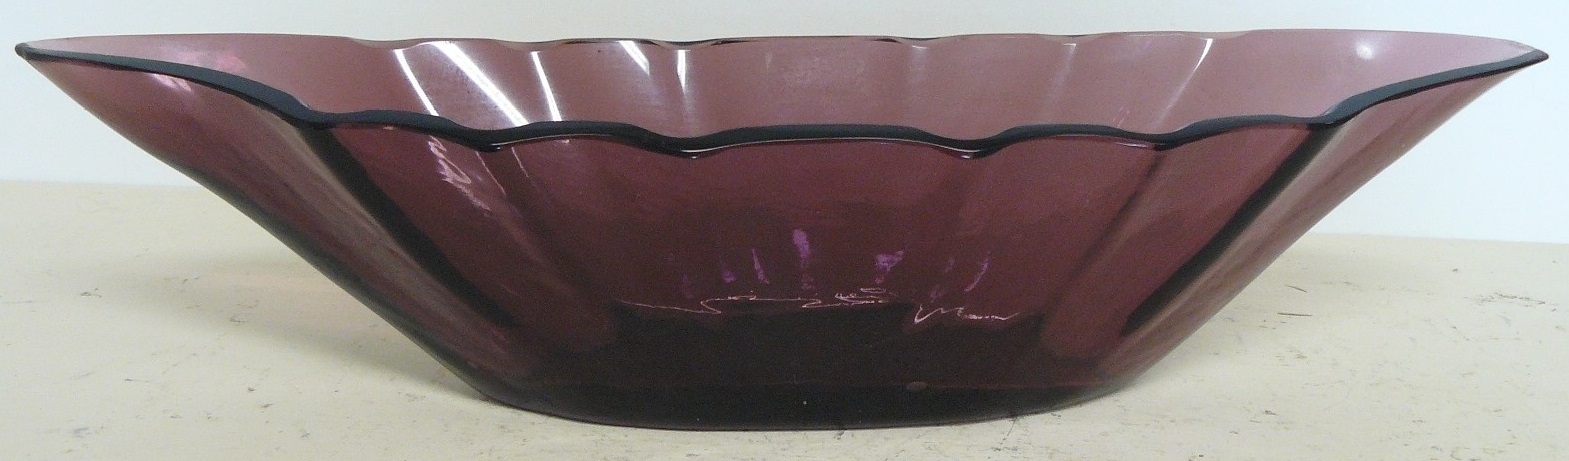 6891 - Amethyst Transparent Bowl